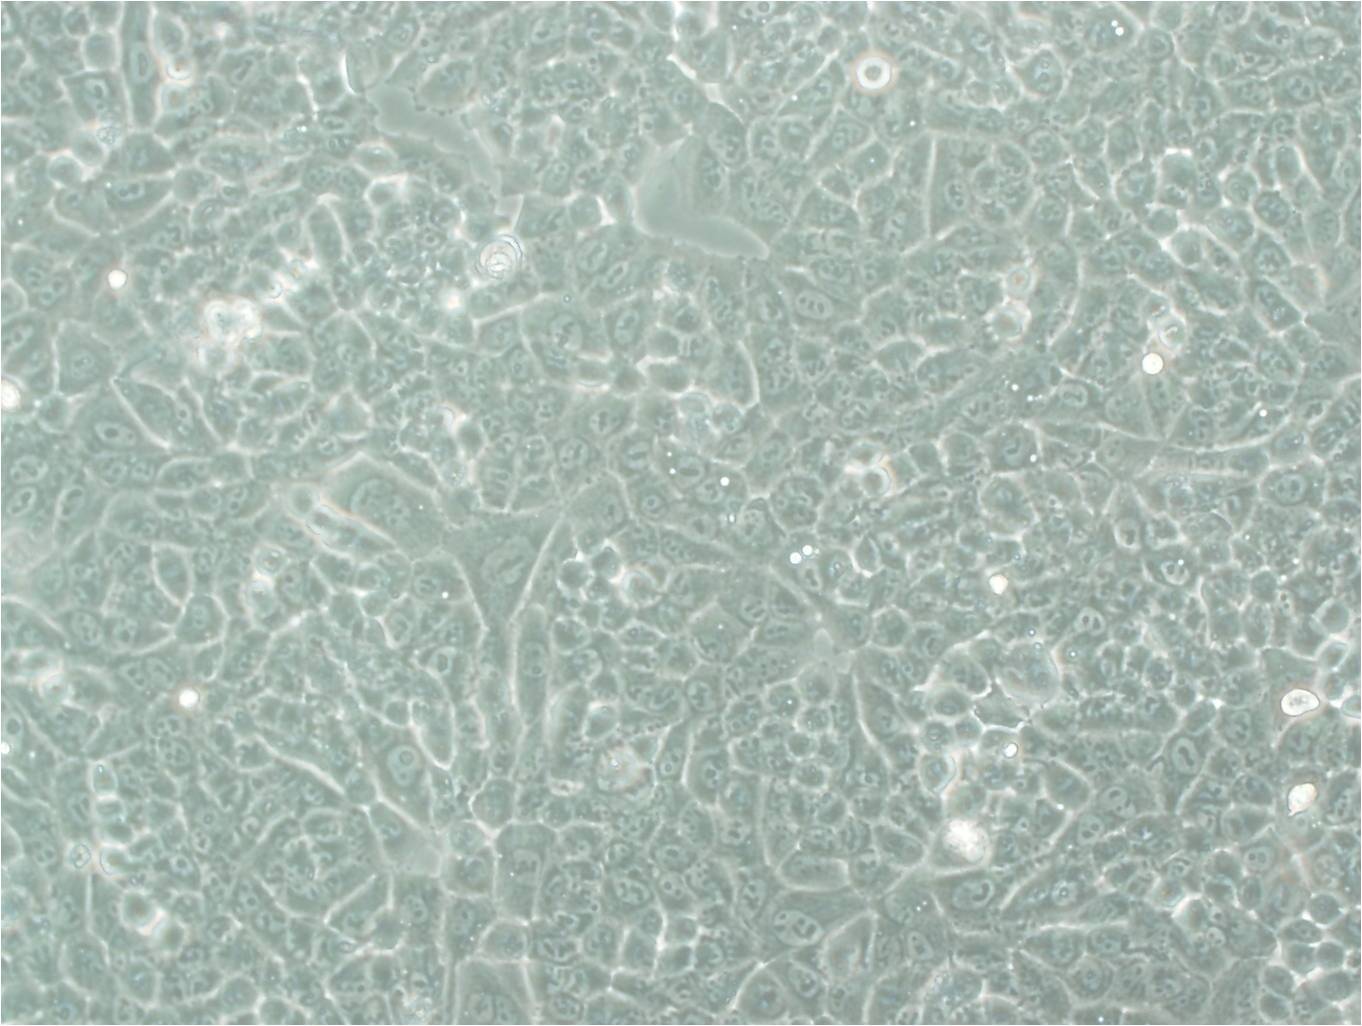 NCI-H1666 cell line人肺支气管癌细胞系